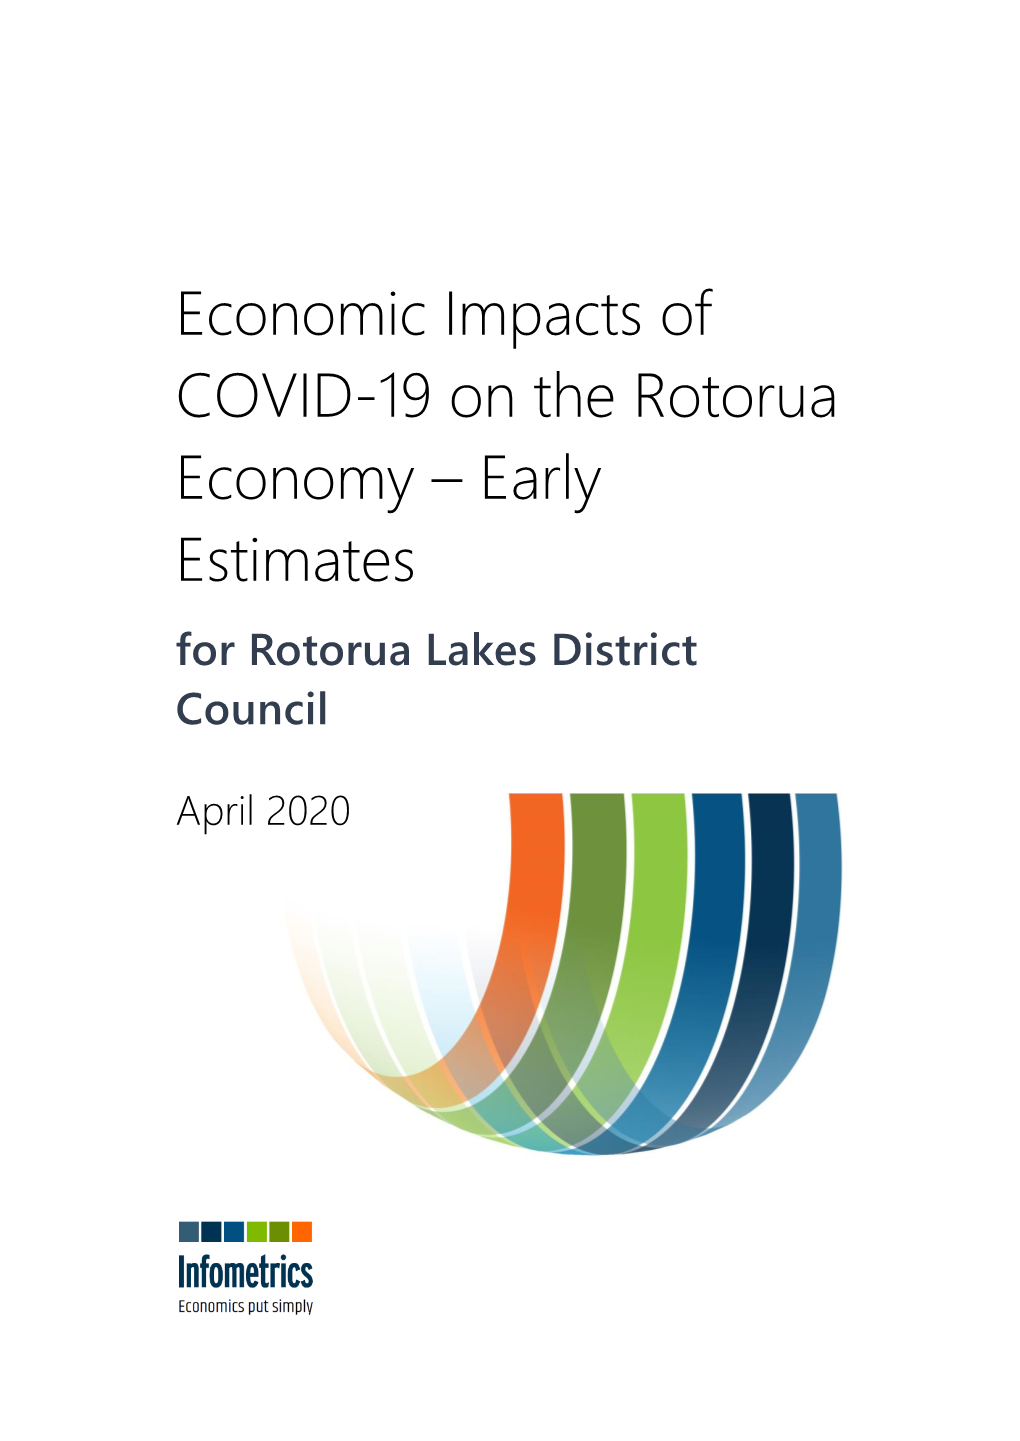 Economic Impacts of COVID-19 on the Rotorua Economy – Early Estimates for Rotorua Lakes District Council